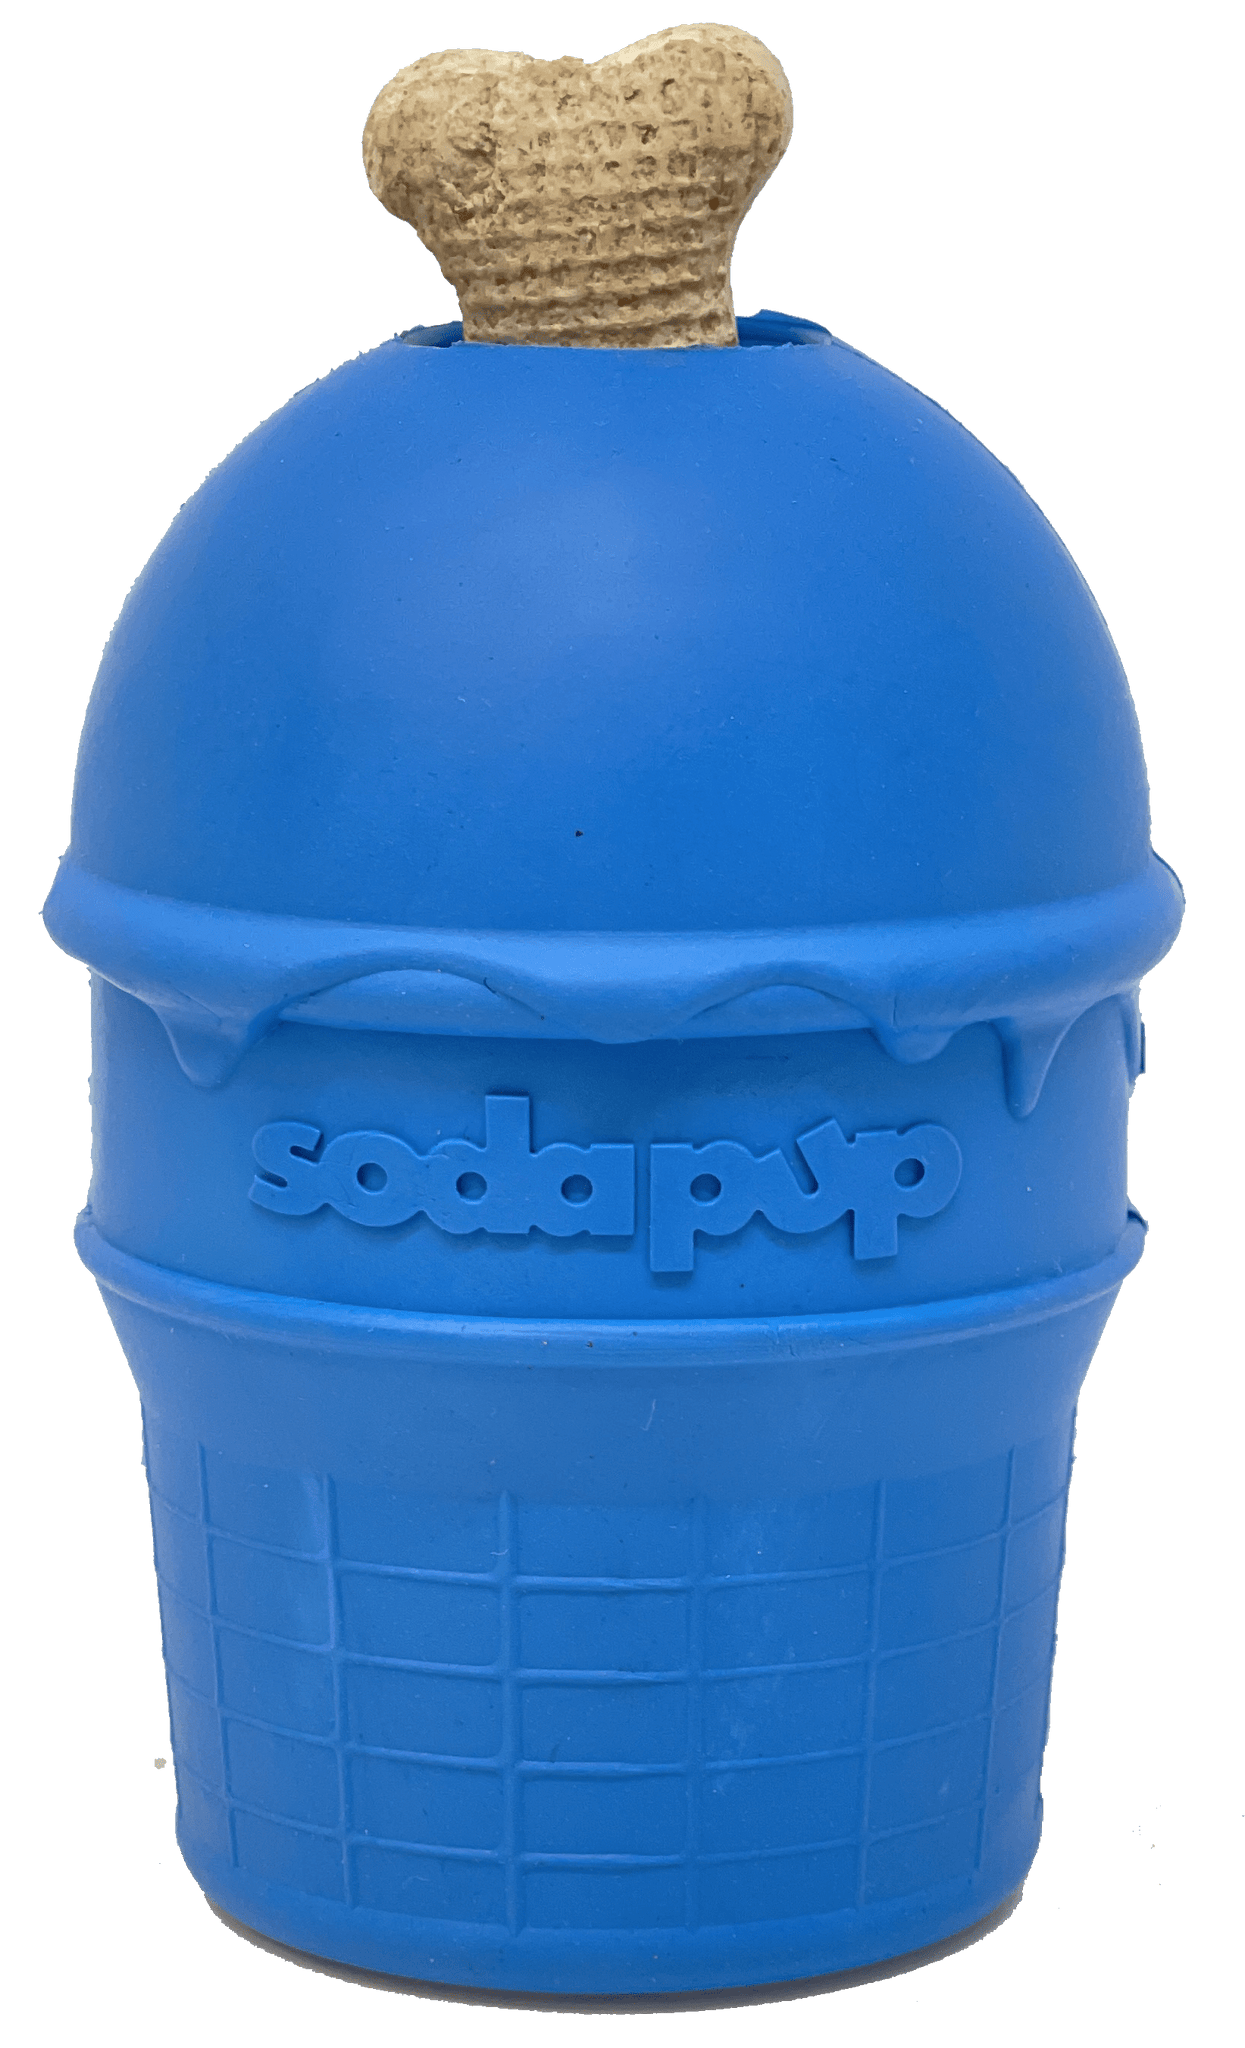 SP Ice Cream Cone Durable Rubber Chew Toy and Treat Dispenser - Large Ice Cream Cone - Blue